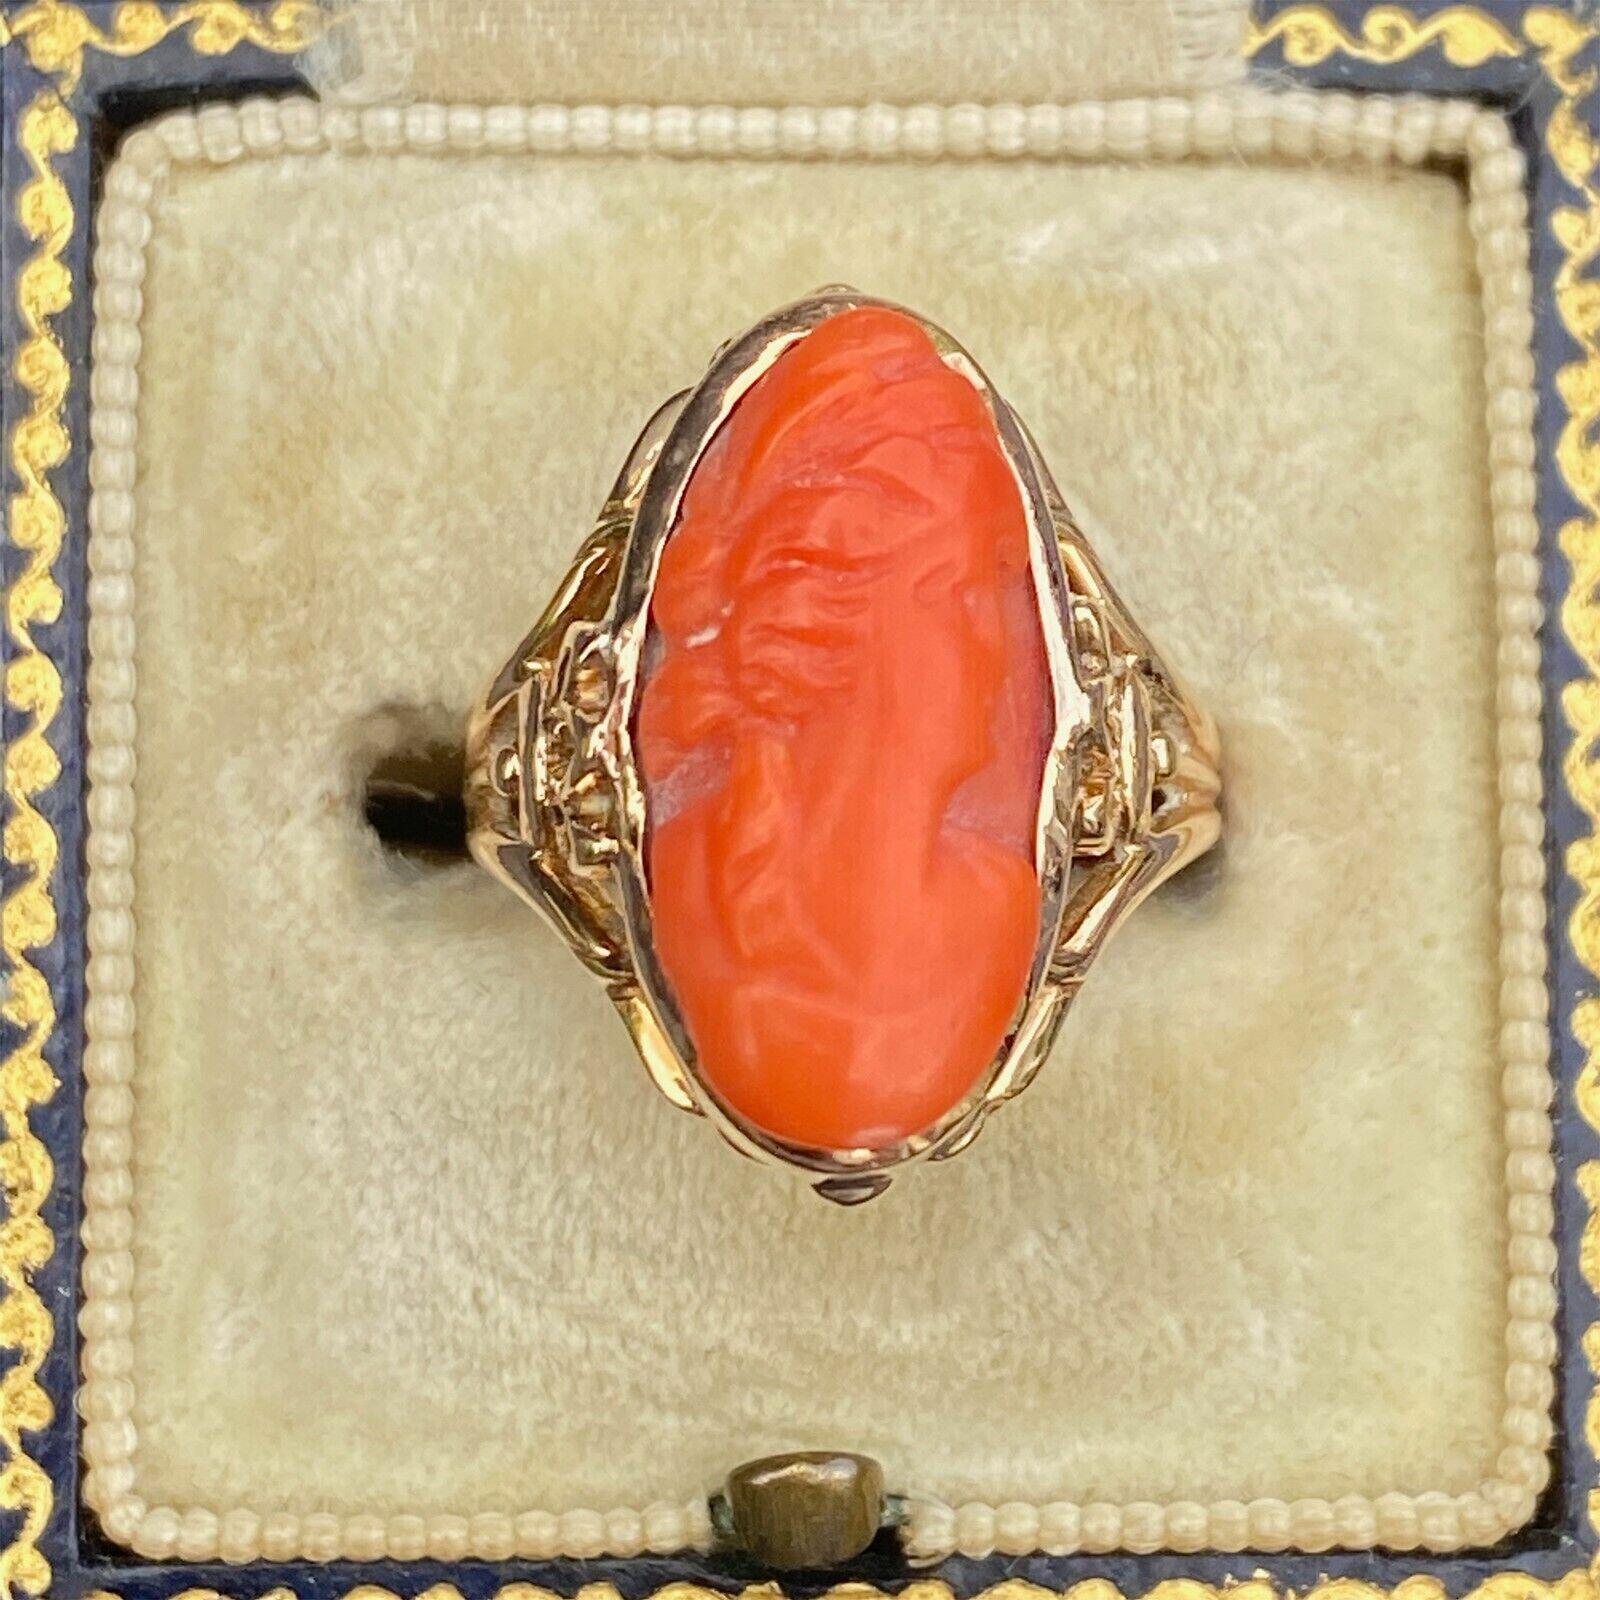 SOLD - Antique, Edwardian 10ct Gold Carved Coral Portrait Ring